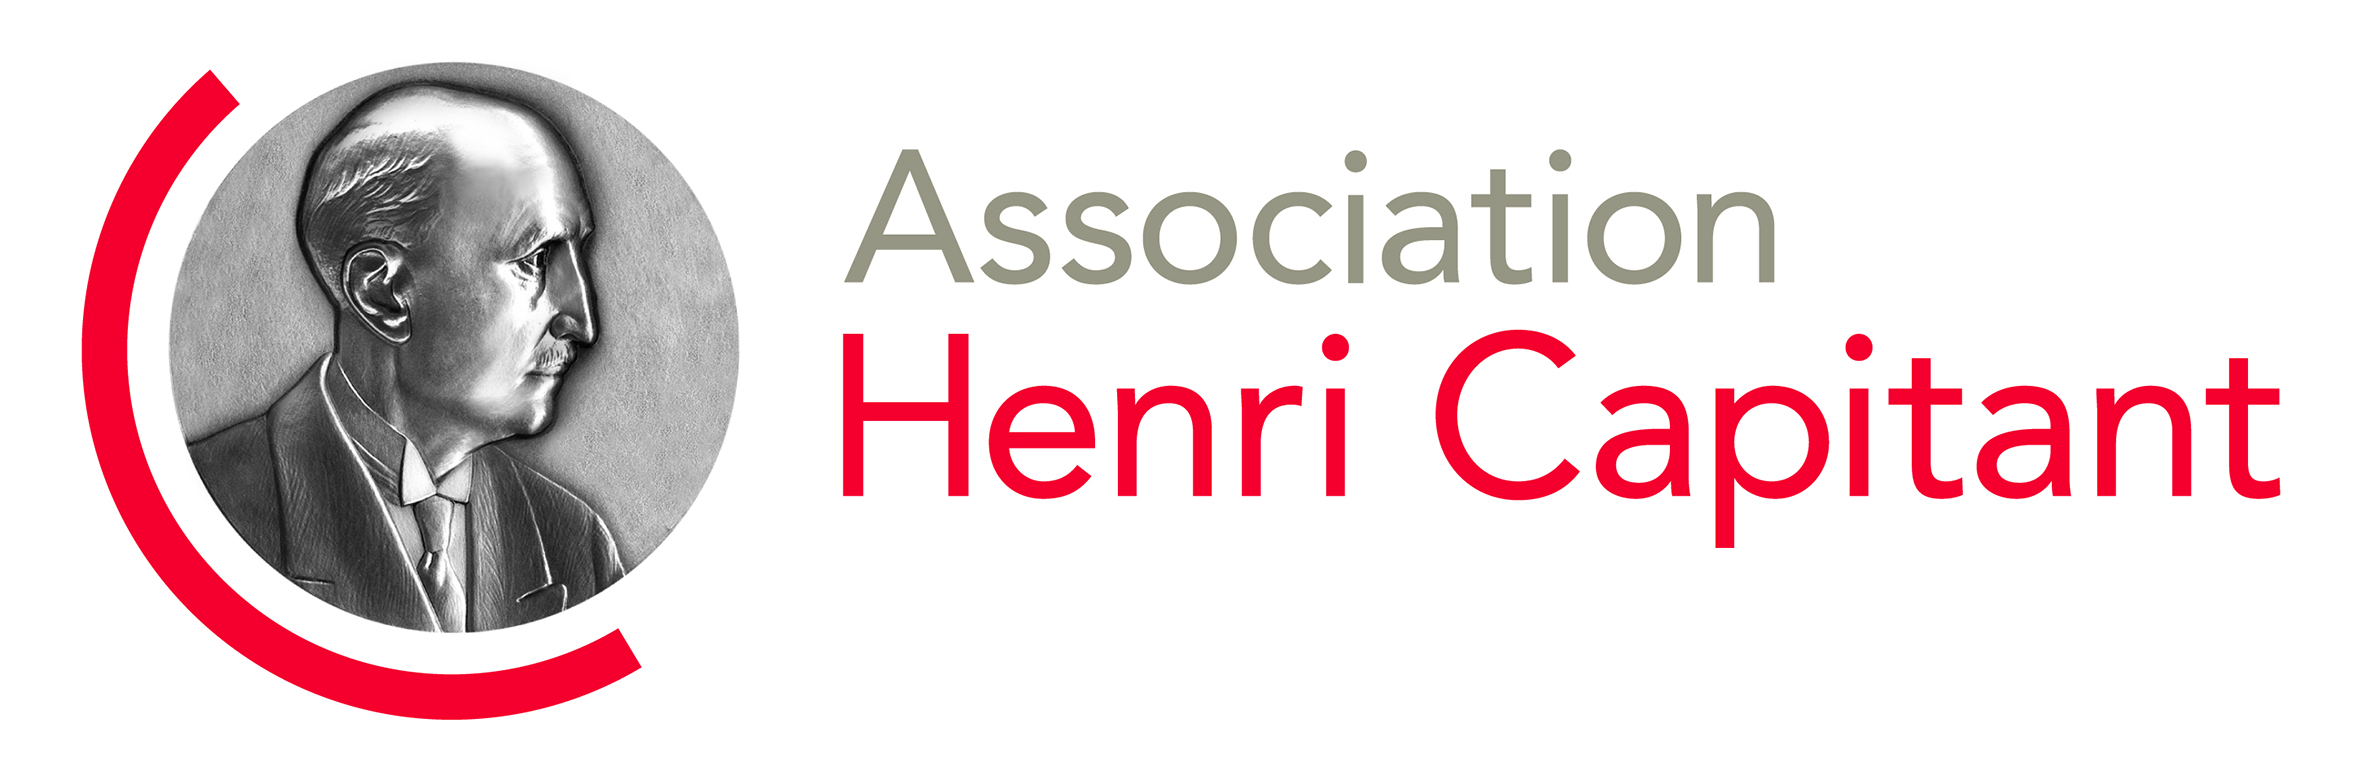 Association Henri Capitant